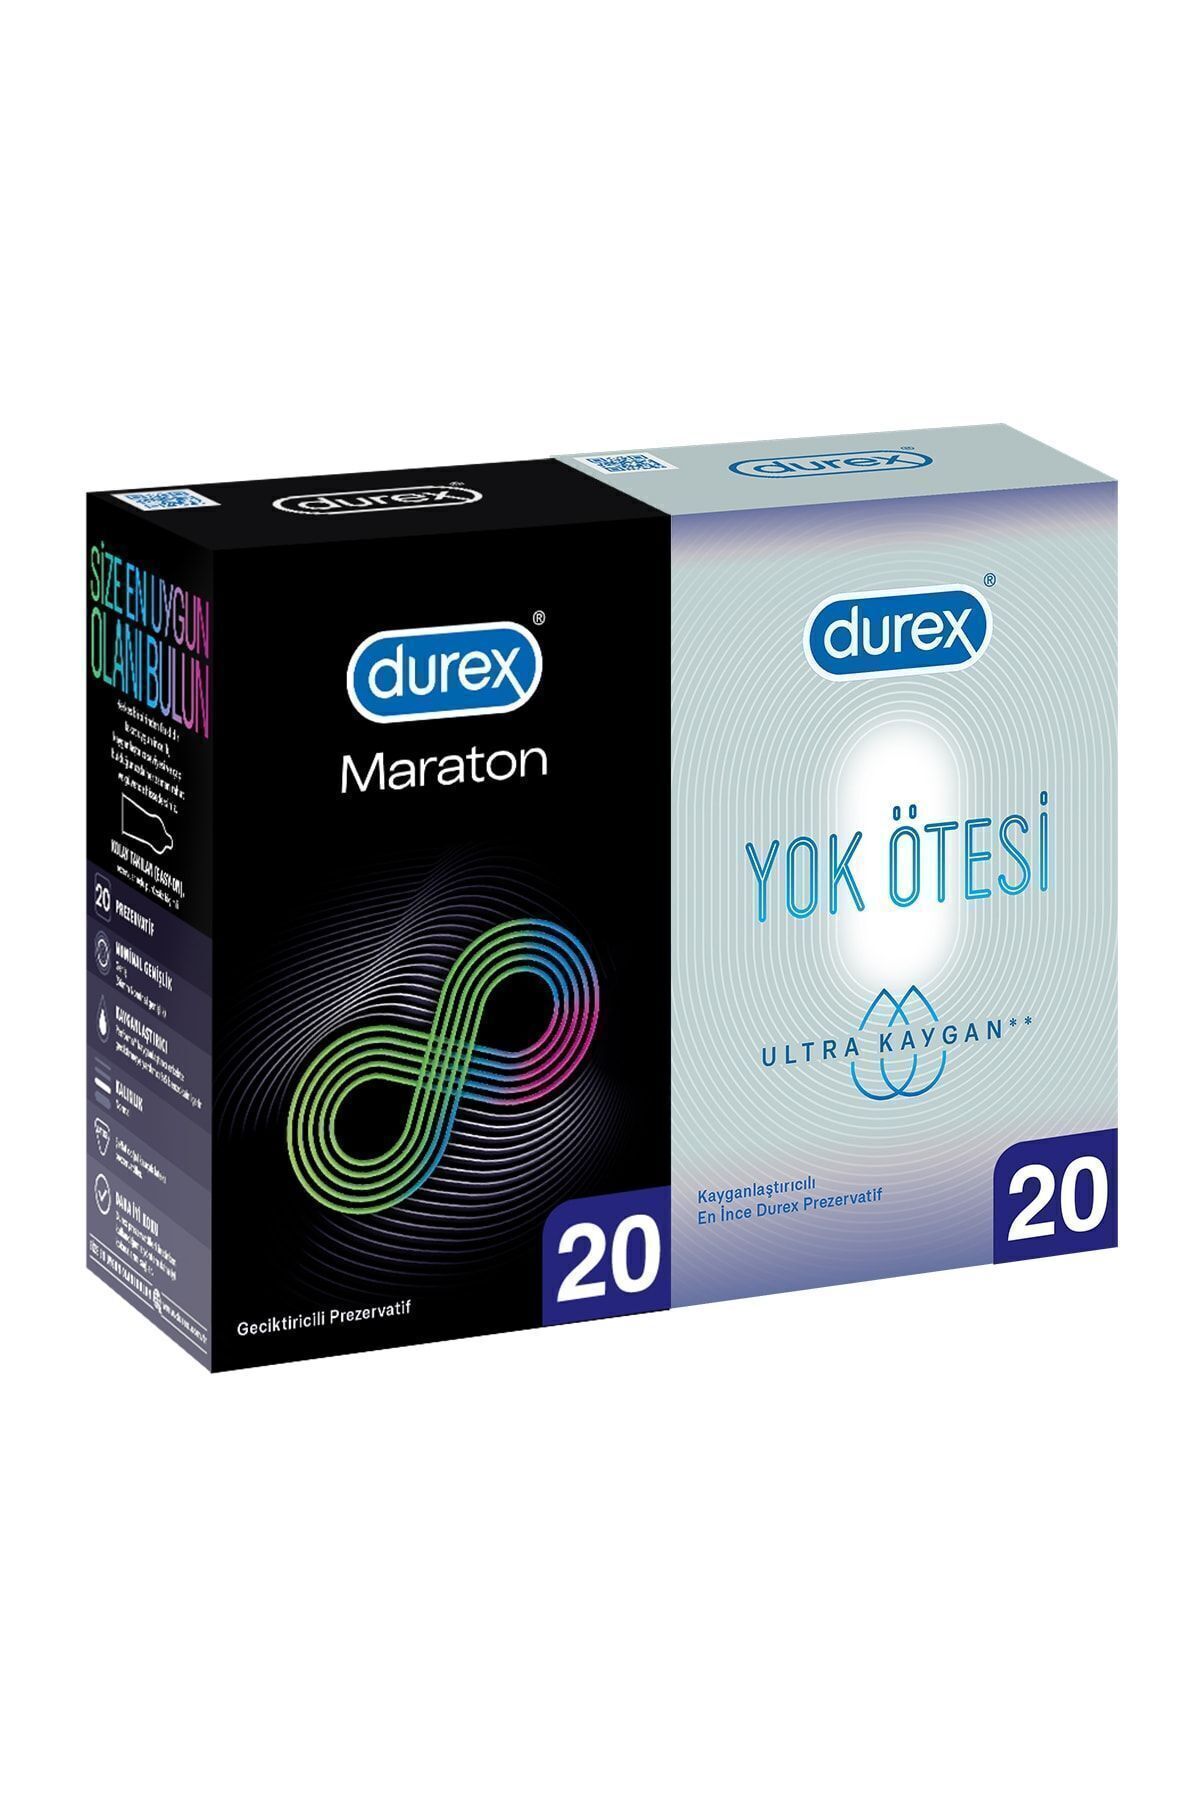 Durex Maraton Geciktiricili 20li + Yok Ötesi Ultra Kaygan 20li Prezervatif Paketi